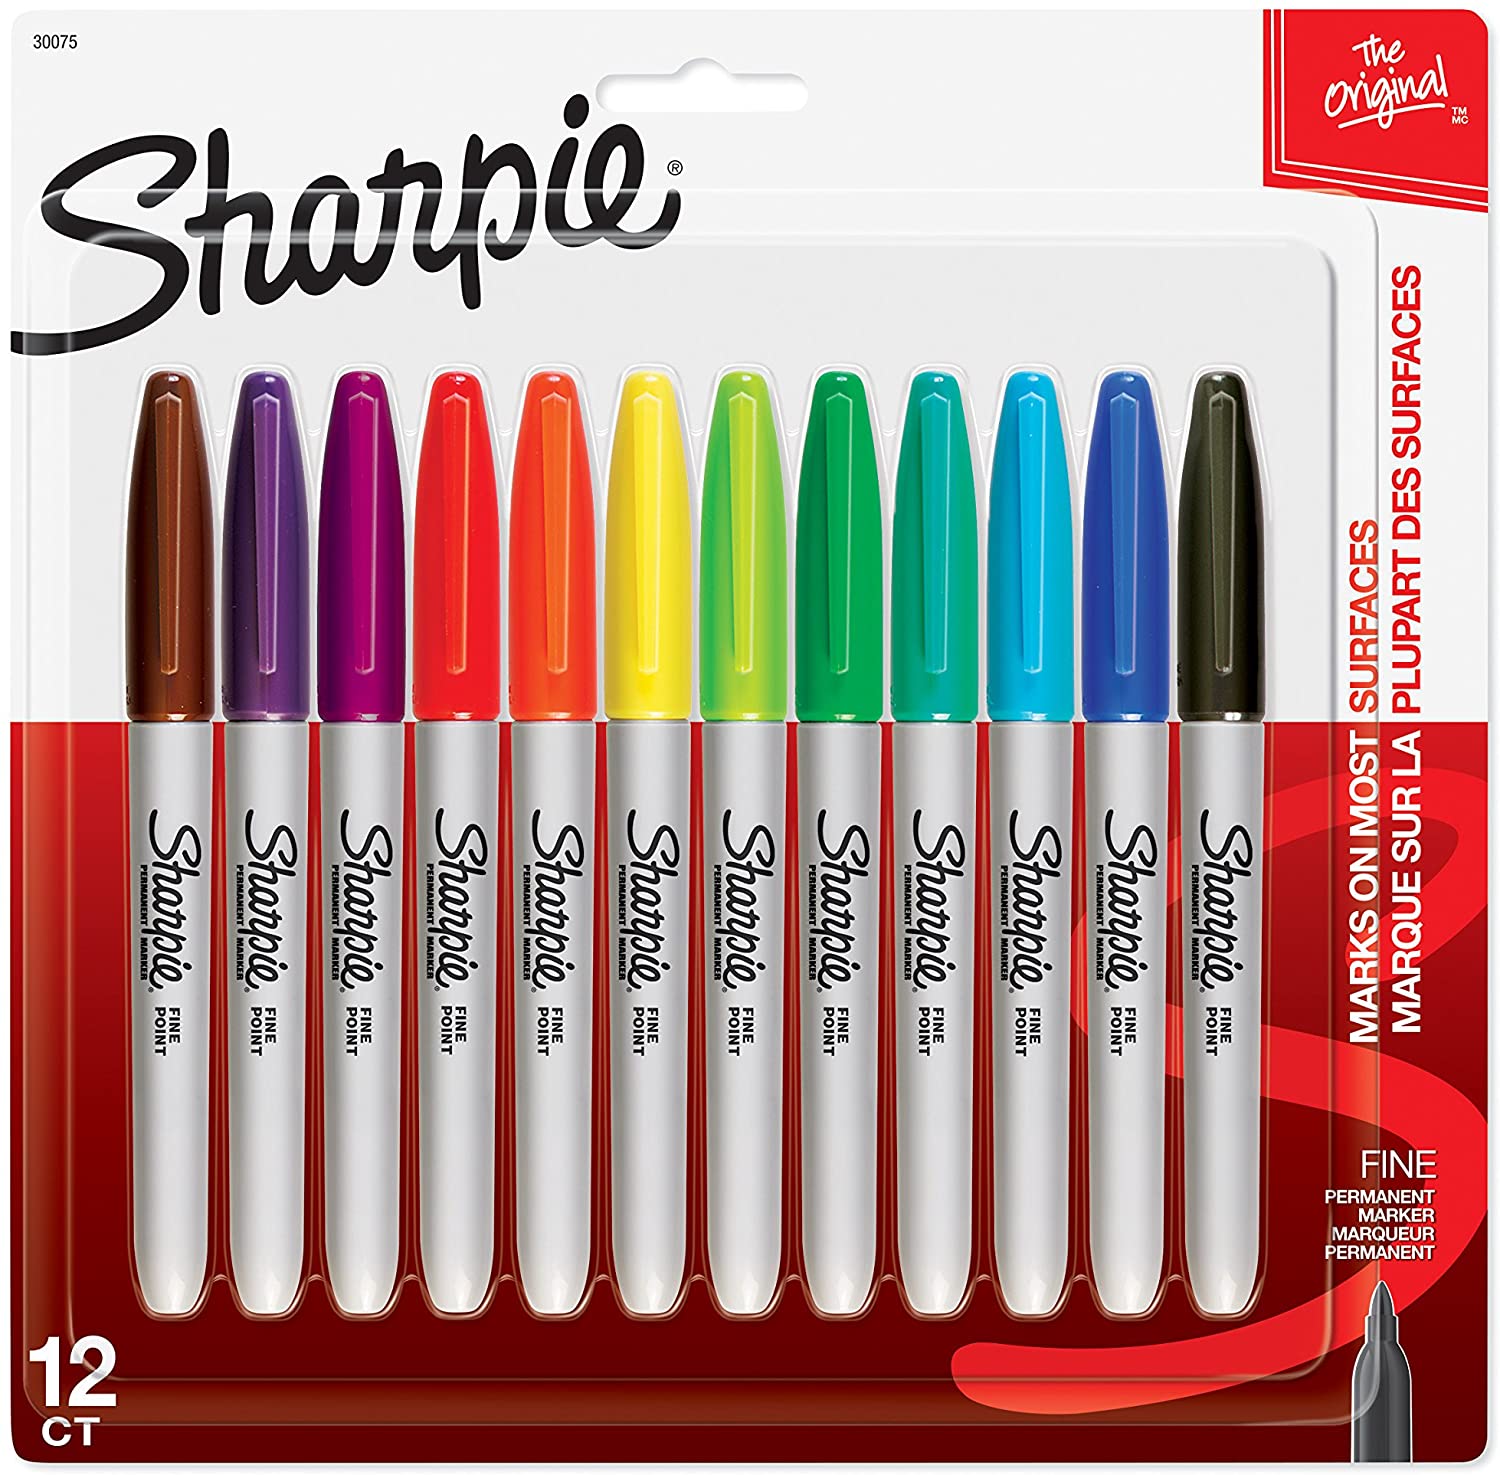 7 SHARPIE ideas  sharpie, sharpie art, sharpie colors